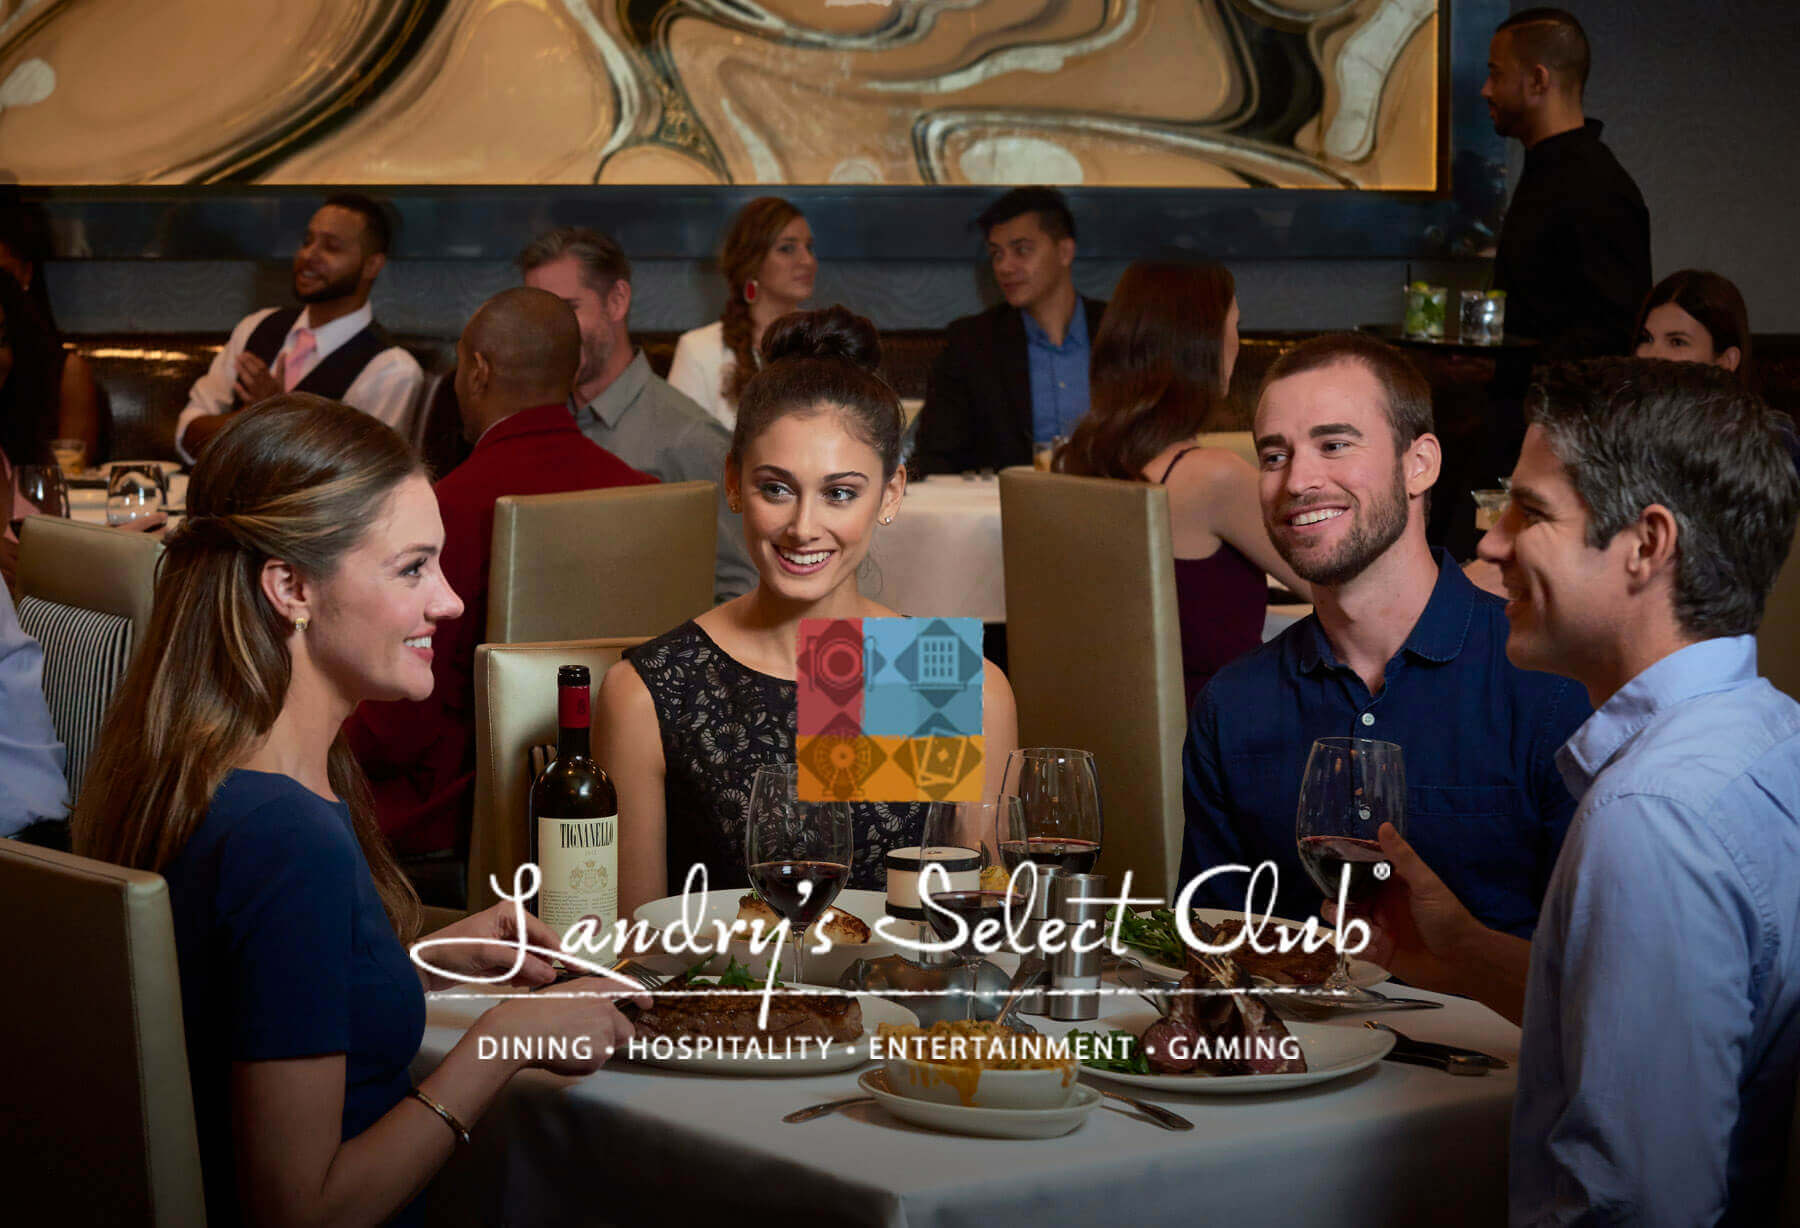 Landry's Select Club